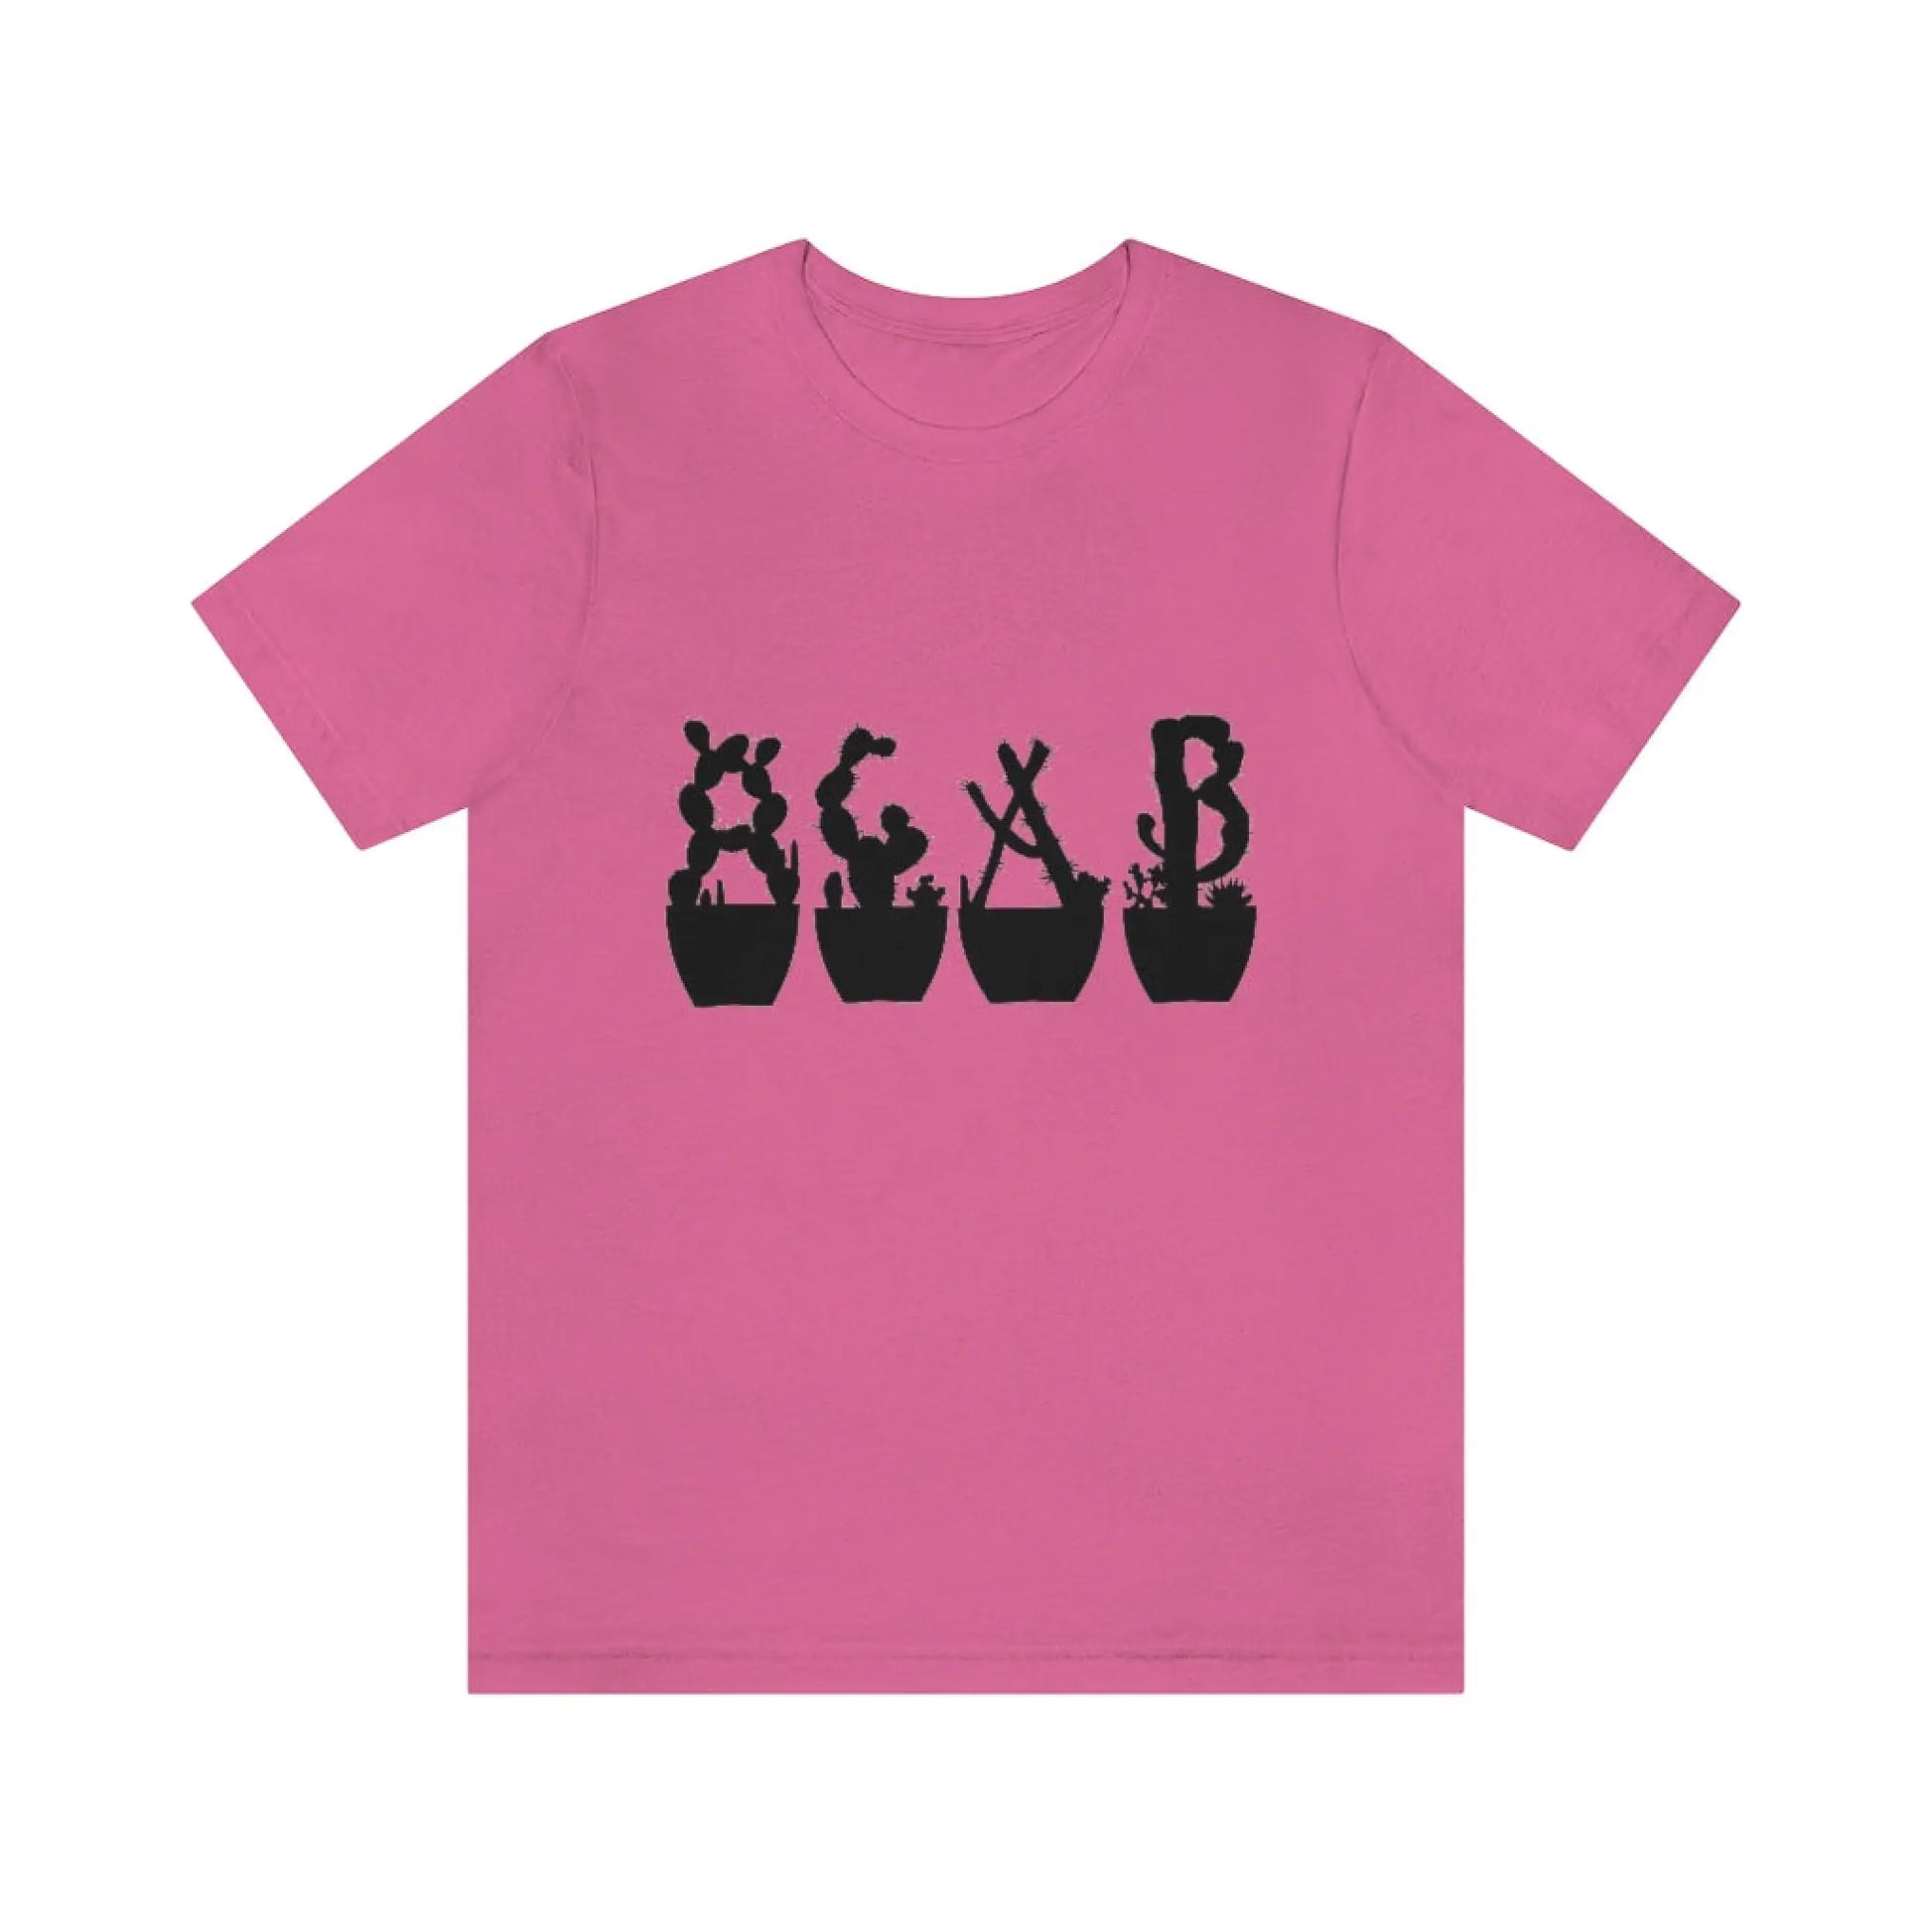 Shirts XL - Just Beautiful Cactuses - Charity Pink / T-Shirt